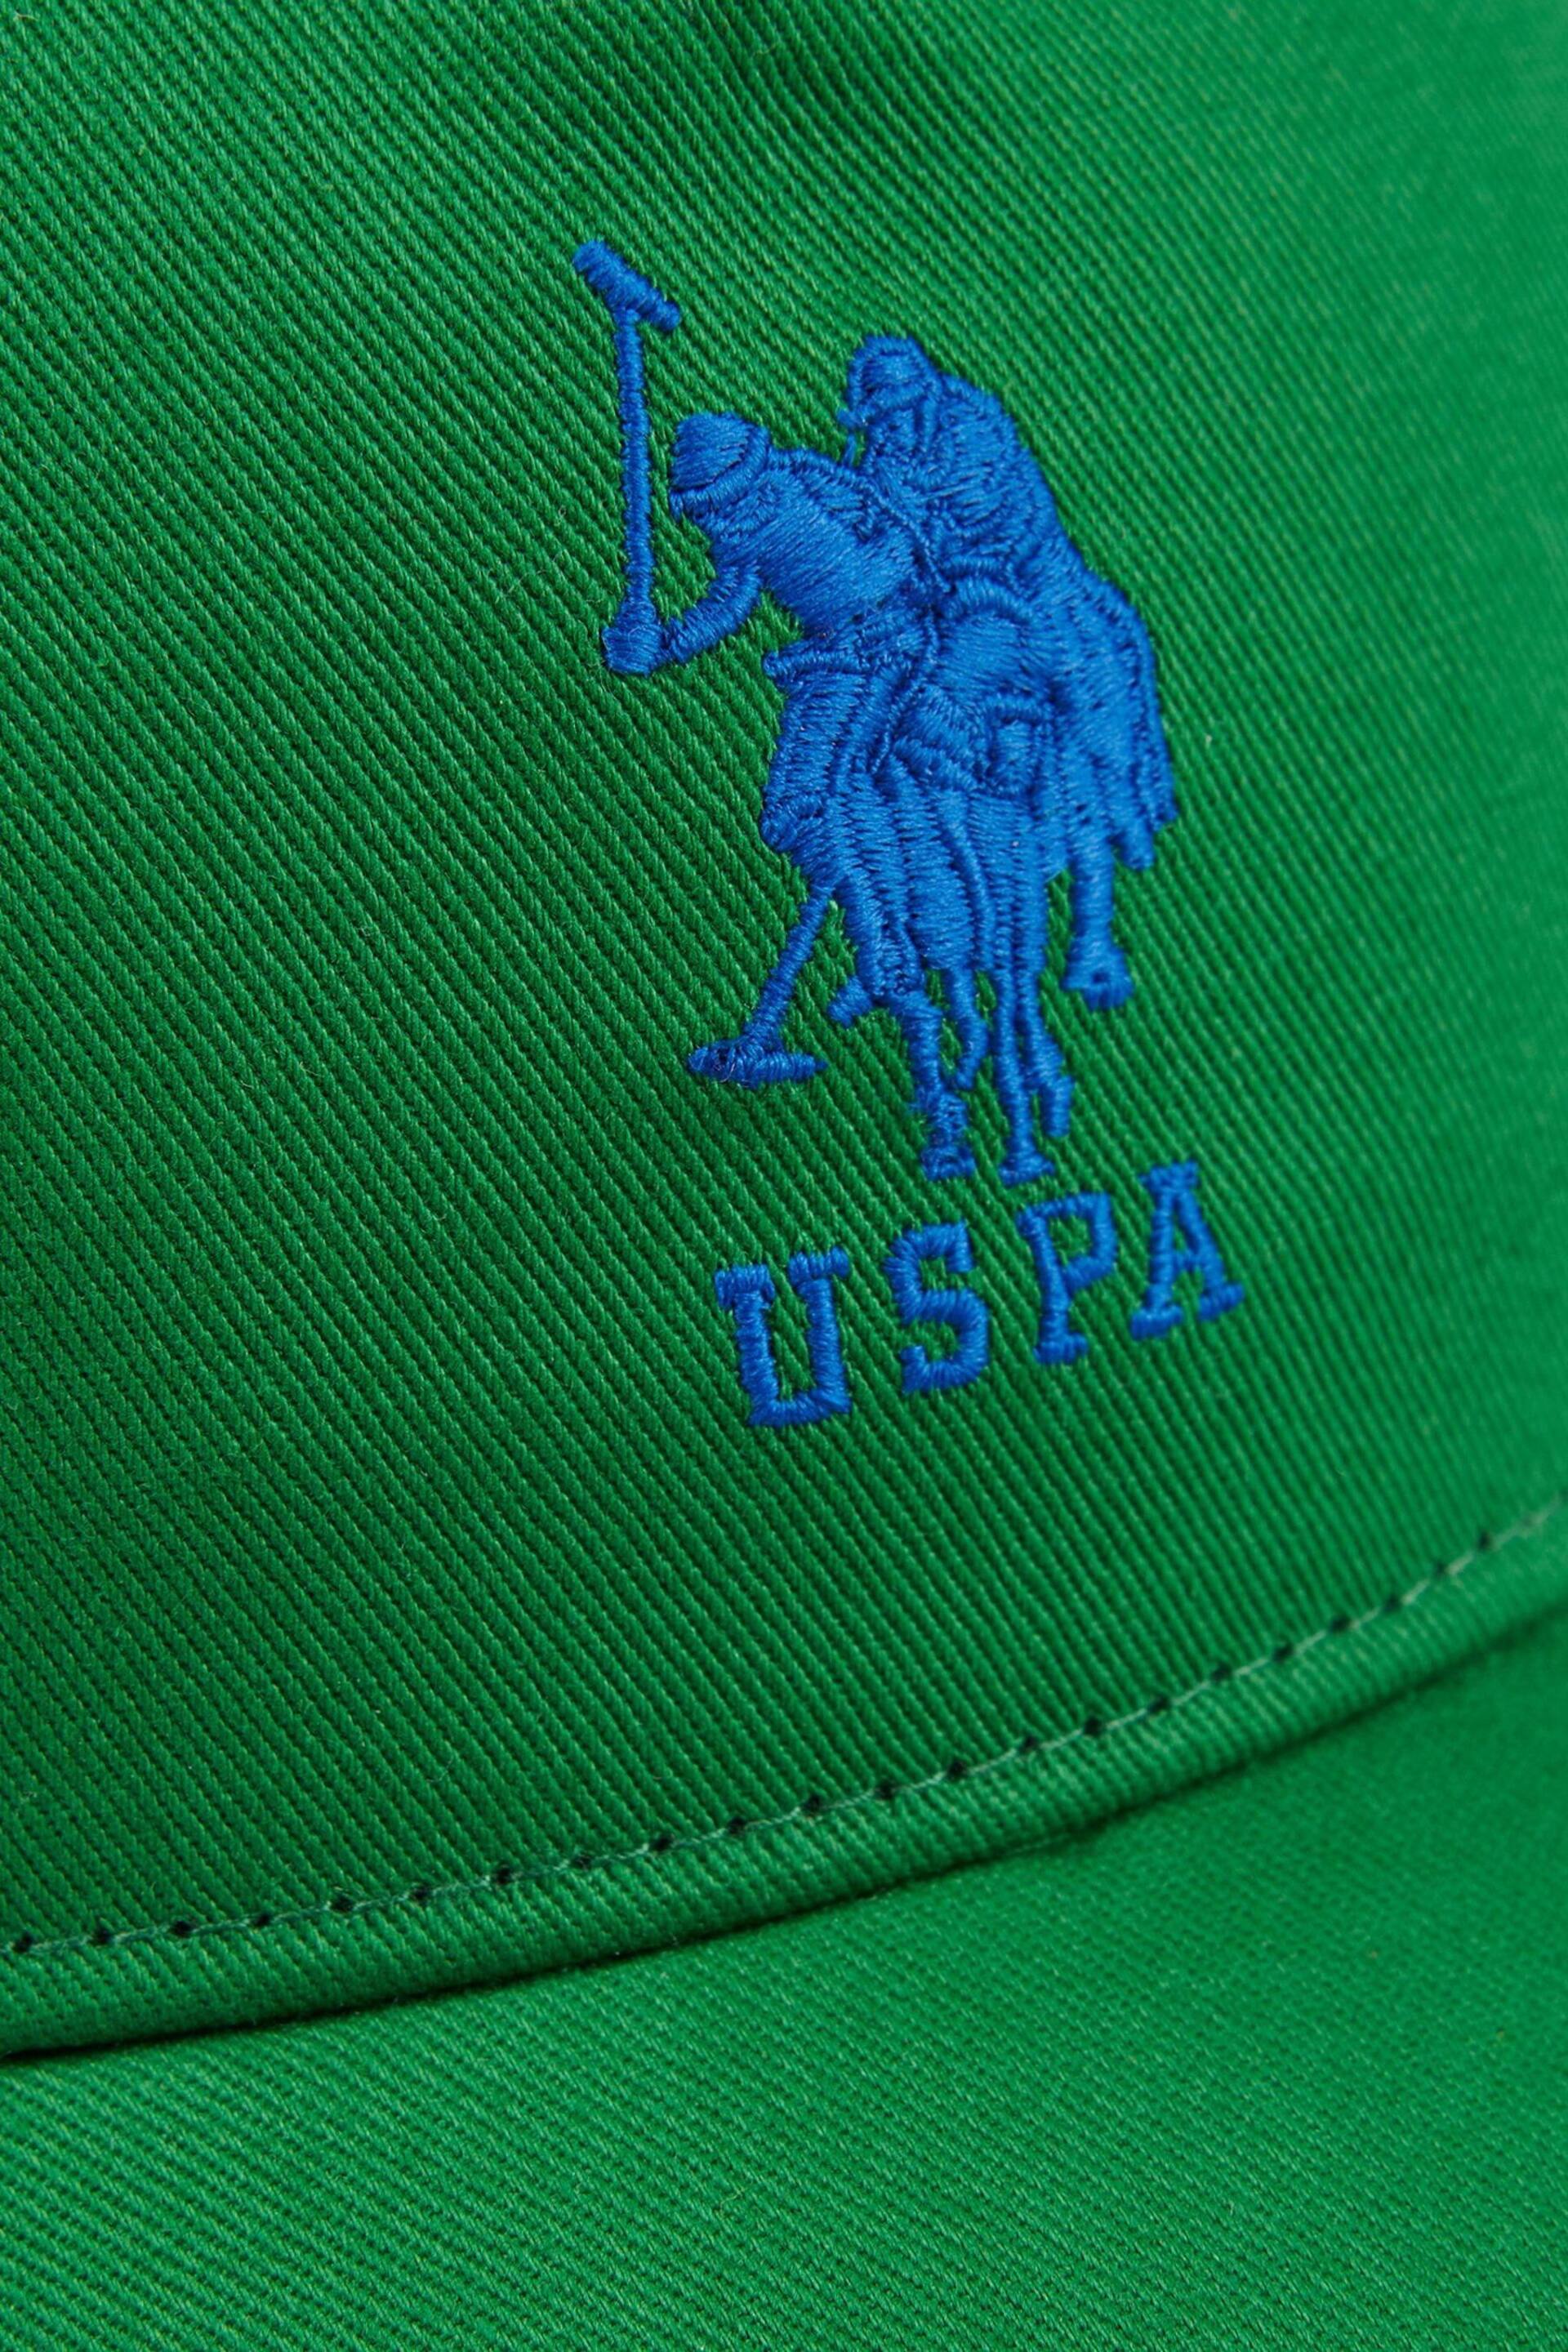 U.S. Polo Assn. Mens Player 3 Baseball Cap - Image 3 of 4